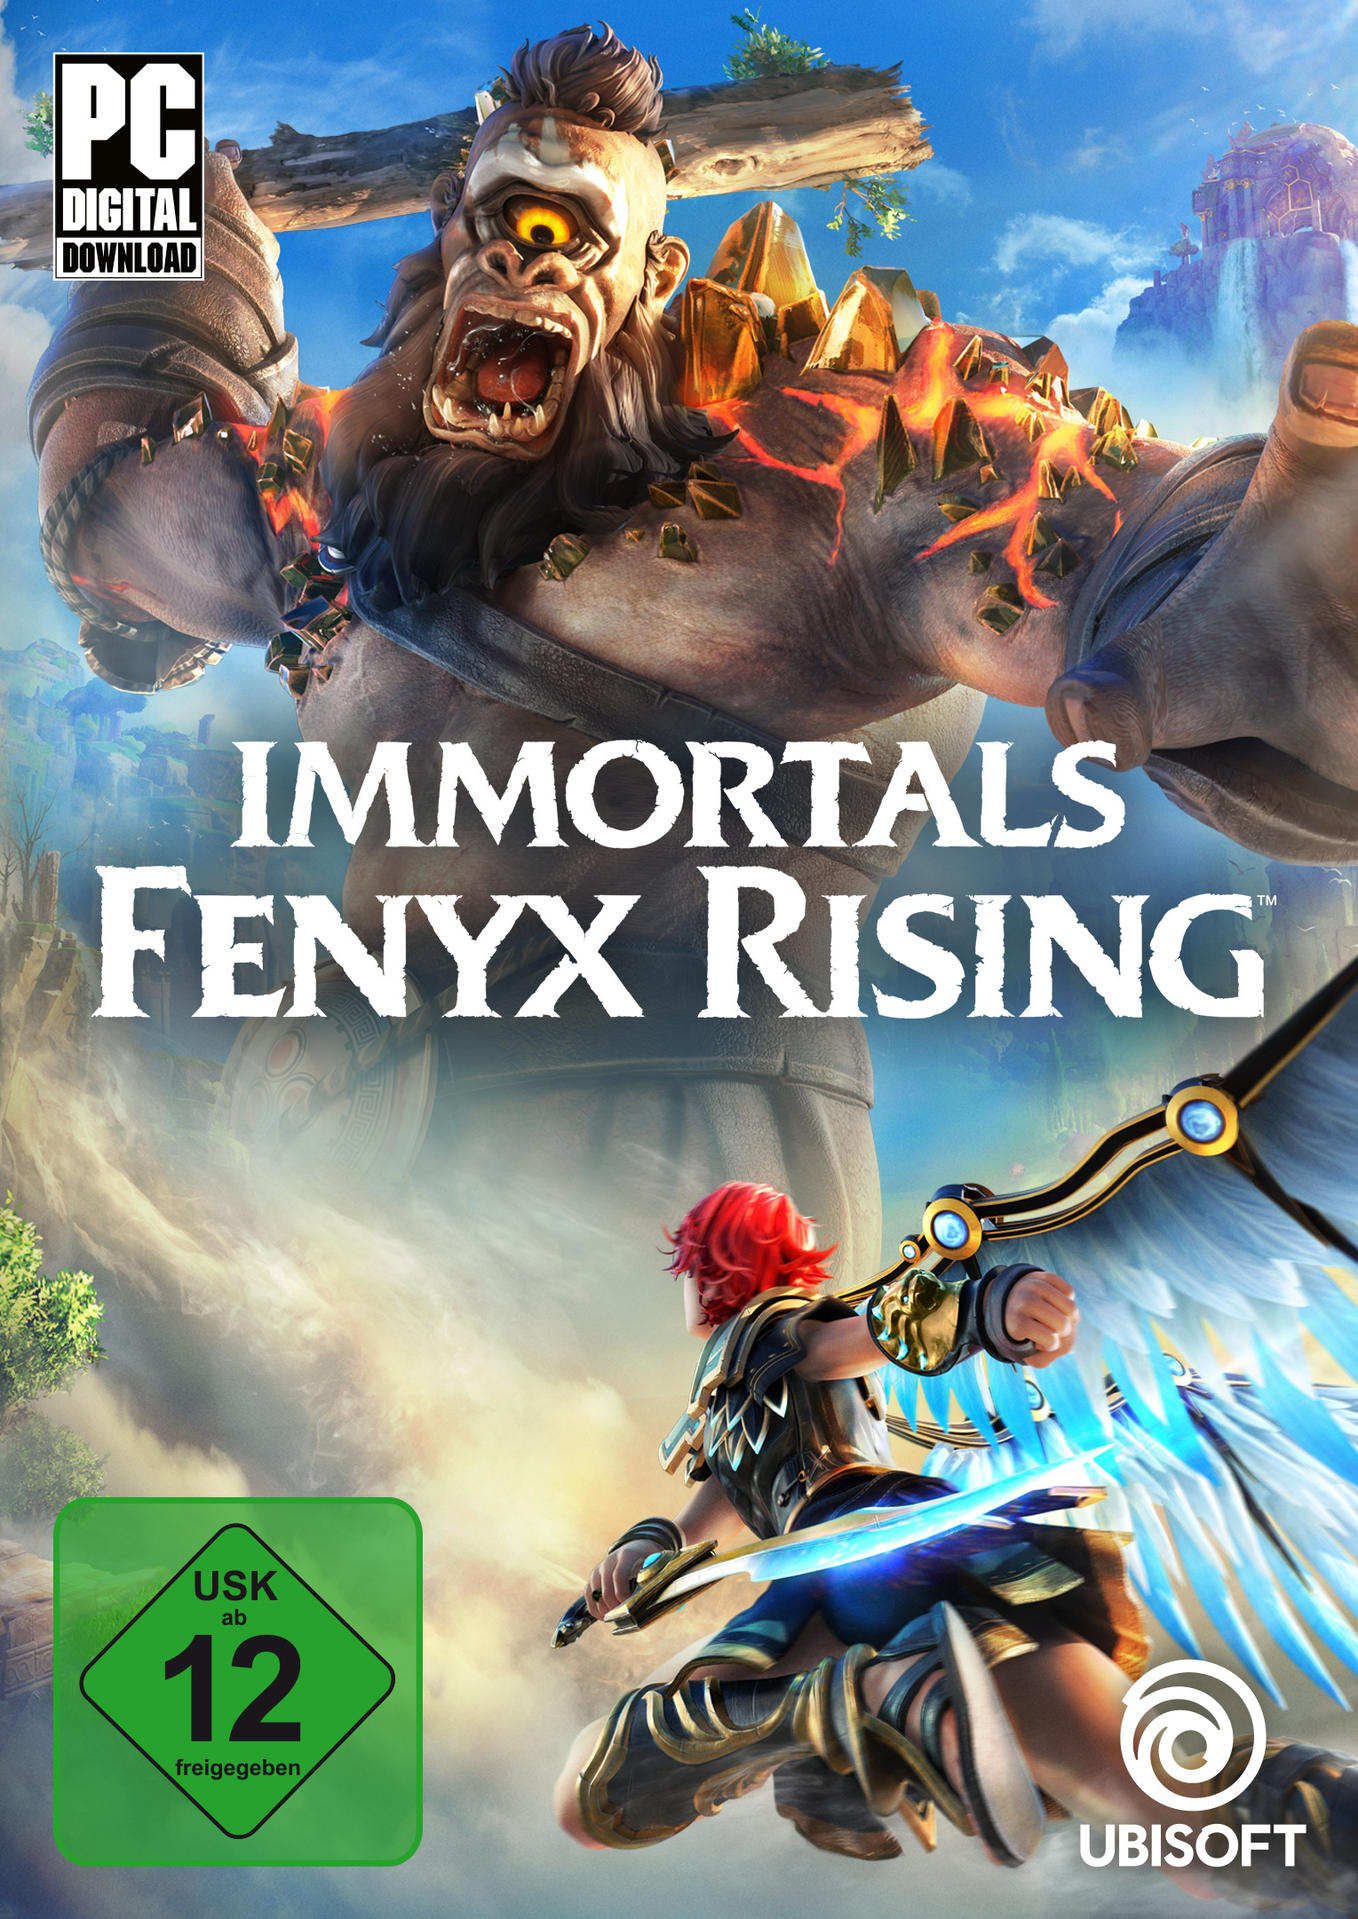 Fenyx der Rising in - [PC] Box) Immortals (Code